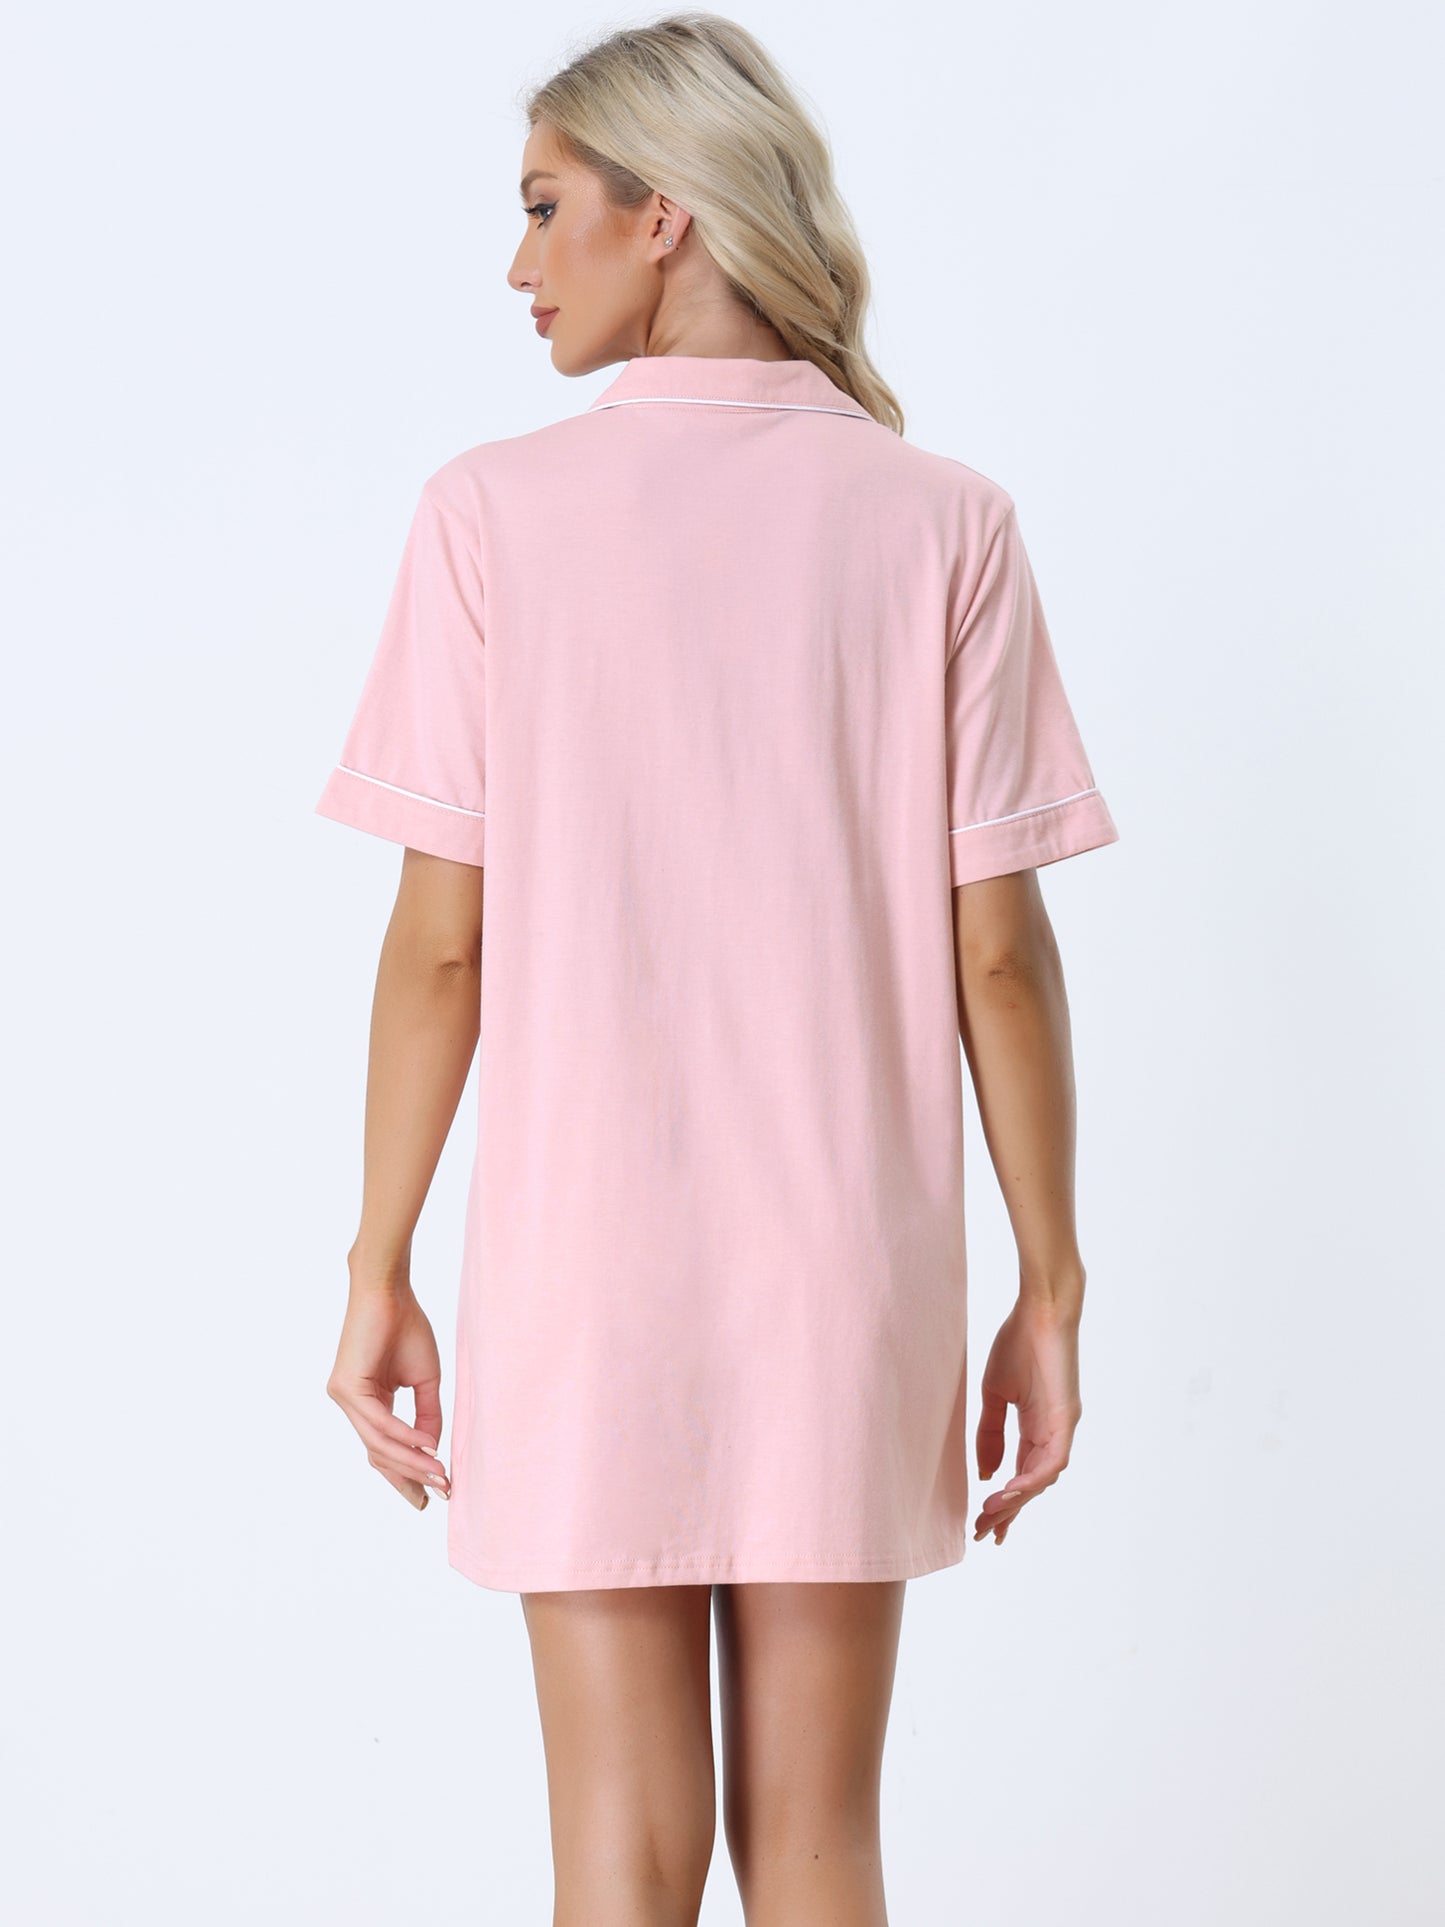 cheibear Lounge Short Sleeves Button Down Pajama Shirt Dress Pink